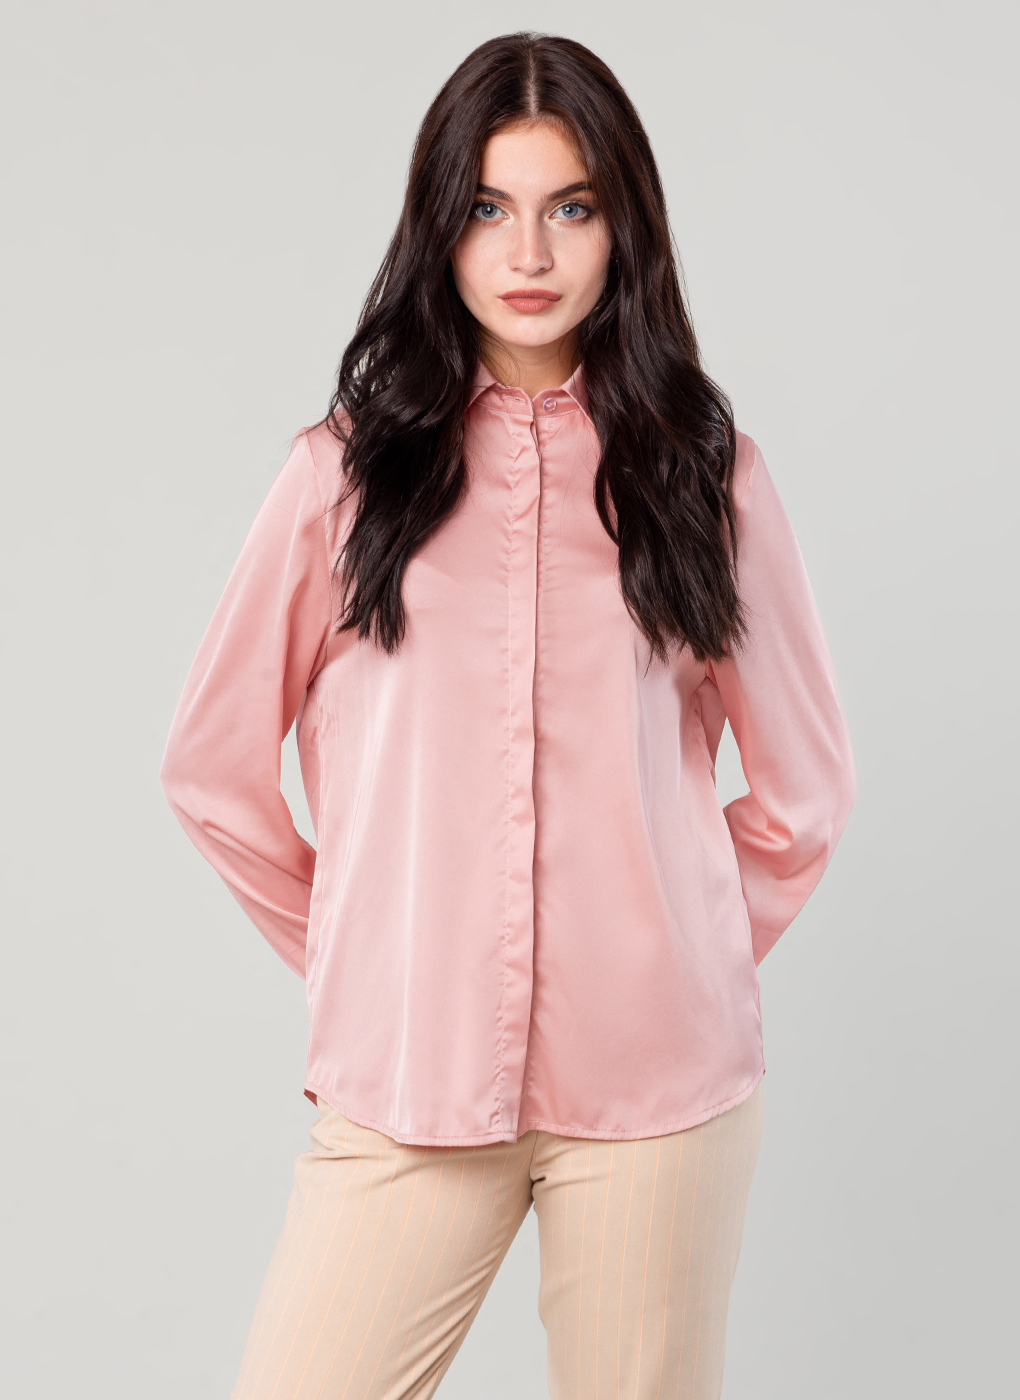 Блуза женская SCANDZA 61656 розовая 44 RU